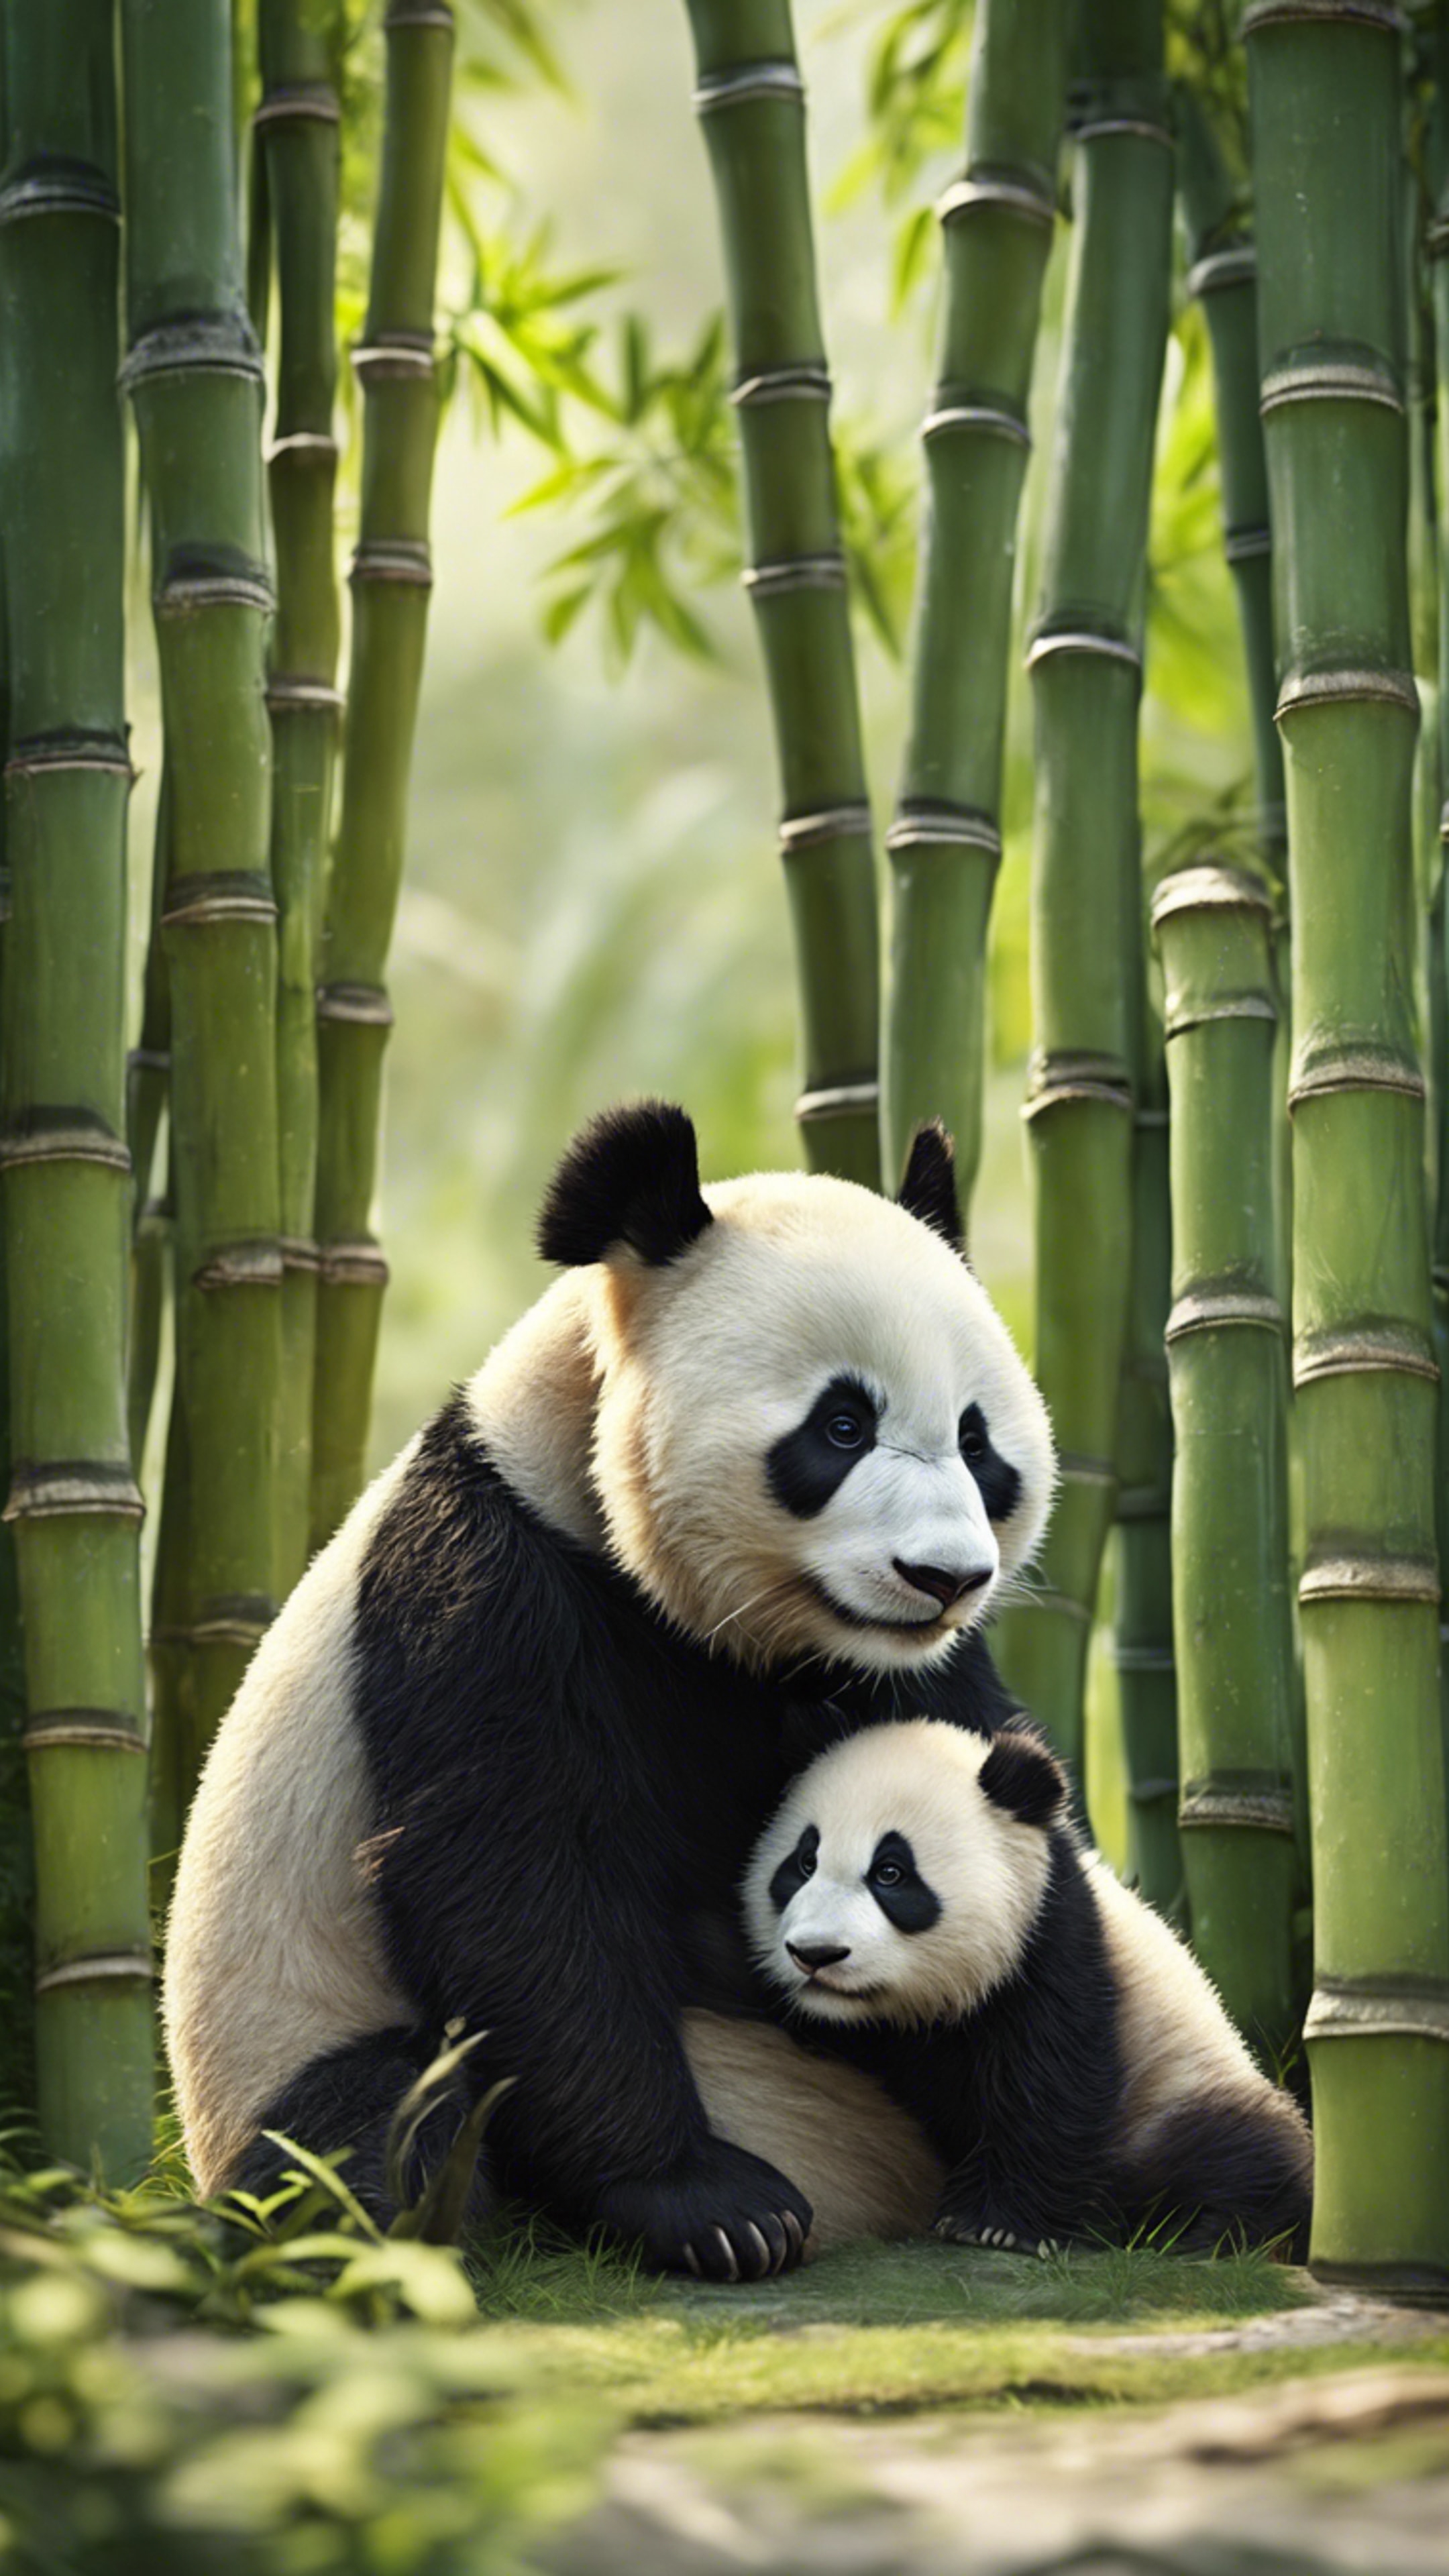 A mother panda teaching her cub to climb a bamboo tree in a tranquil jungle setting. Wallpaper[bf956daca53d4d23a107]